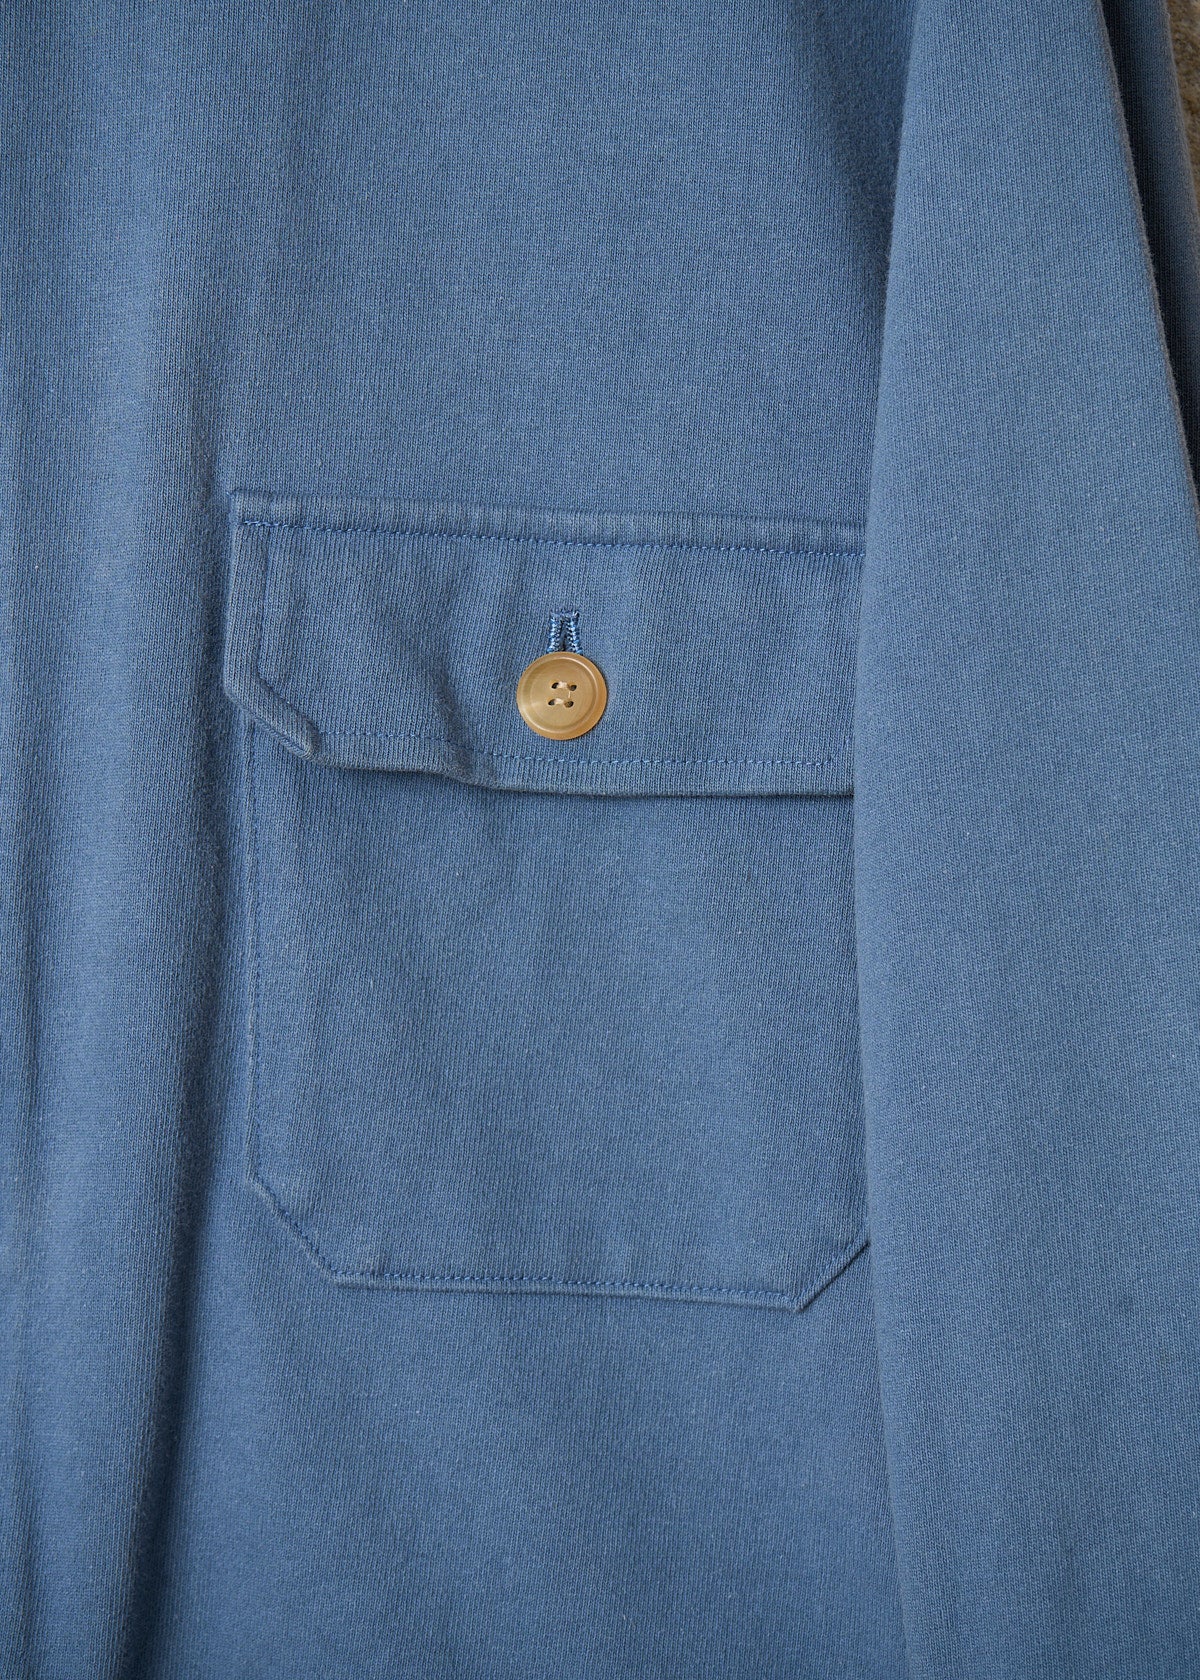 Y's Men For Men Blue Light Cotton 1 Pocket Zip Work Jacket SS1994 - Small